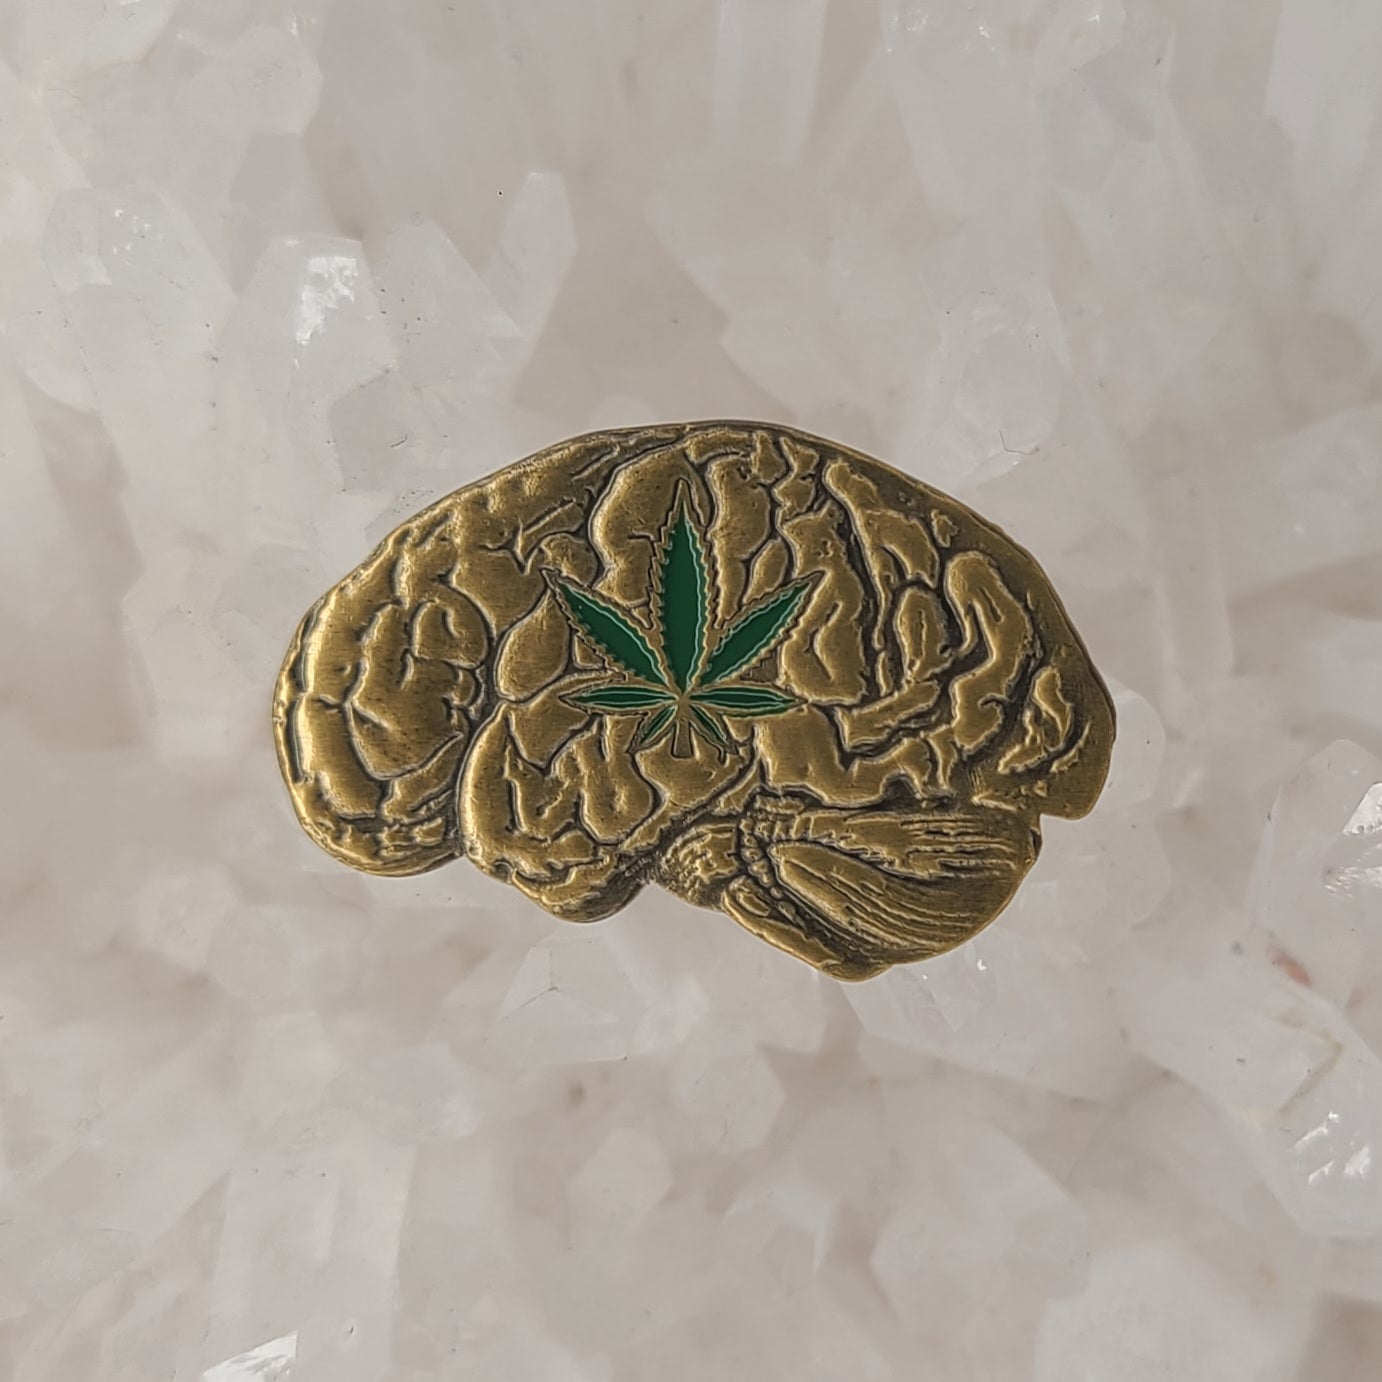 Weed Brain Pot Head Cannabis 3D Metal Enamel Pins Hat Pins Lapel Pin Brooch Badge Festival Pin